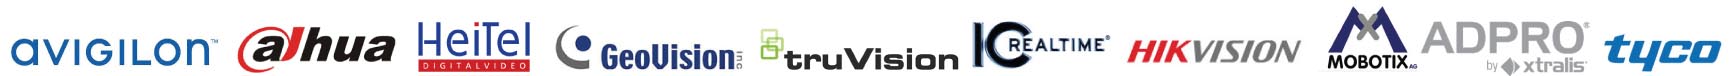 Avigilon Dahua Heitel GeoVision TruVision IC realtime HIKVision Mobotix Adpro Tyco alarm system monitoring CCTV